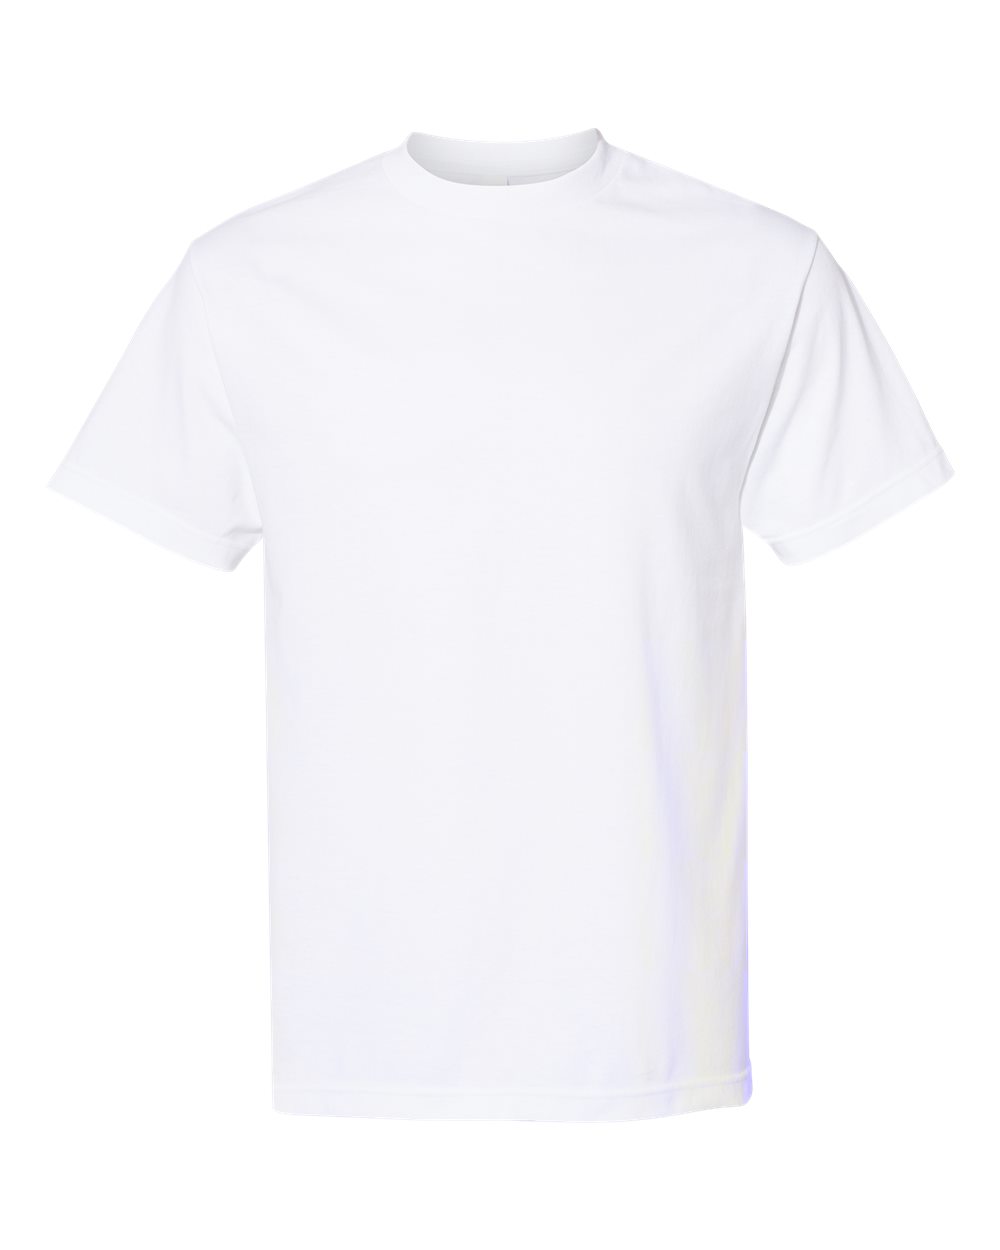 Alstyle 1301 – Short Sleeve Men’s Crew Neck Shirt – 6.0 Oz